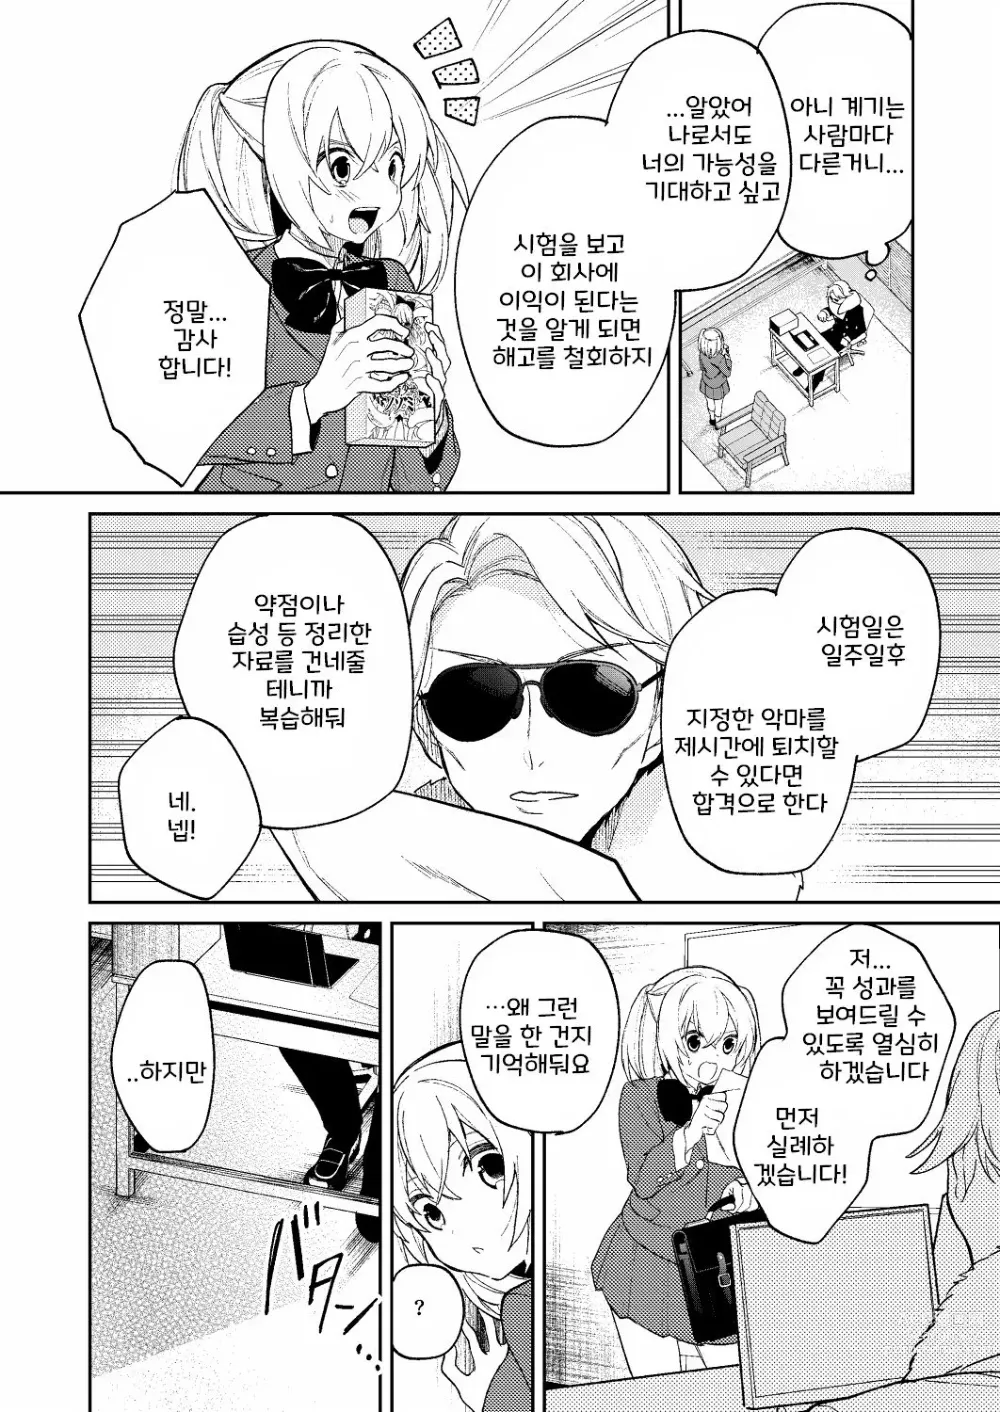 Page 6 of doujinshi ドMな魔法少女が触手に色々される話